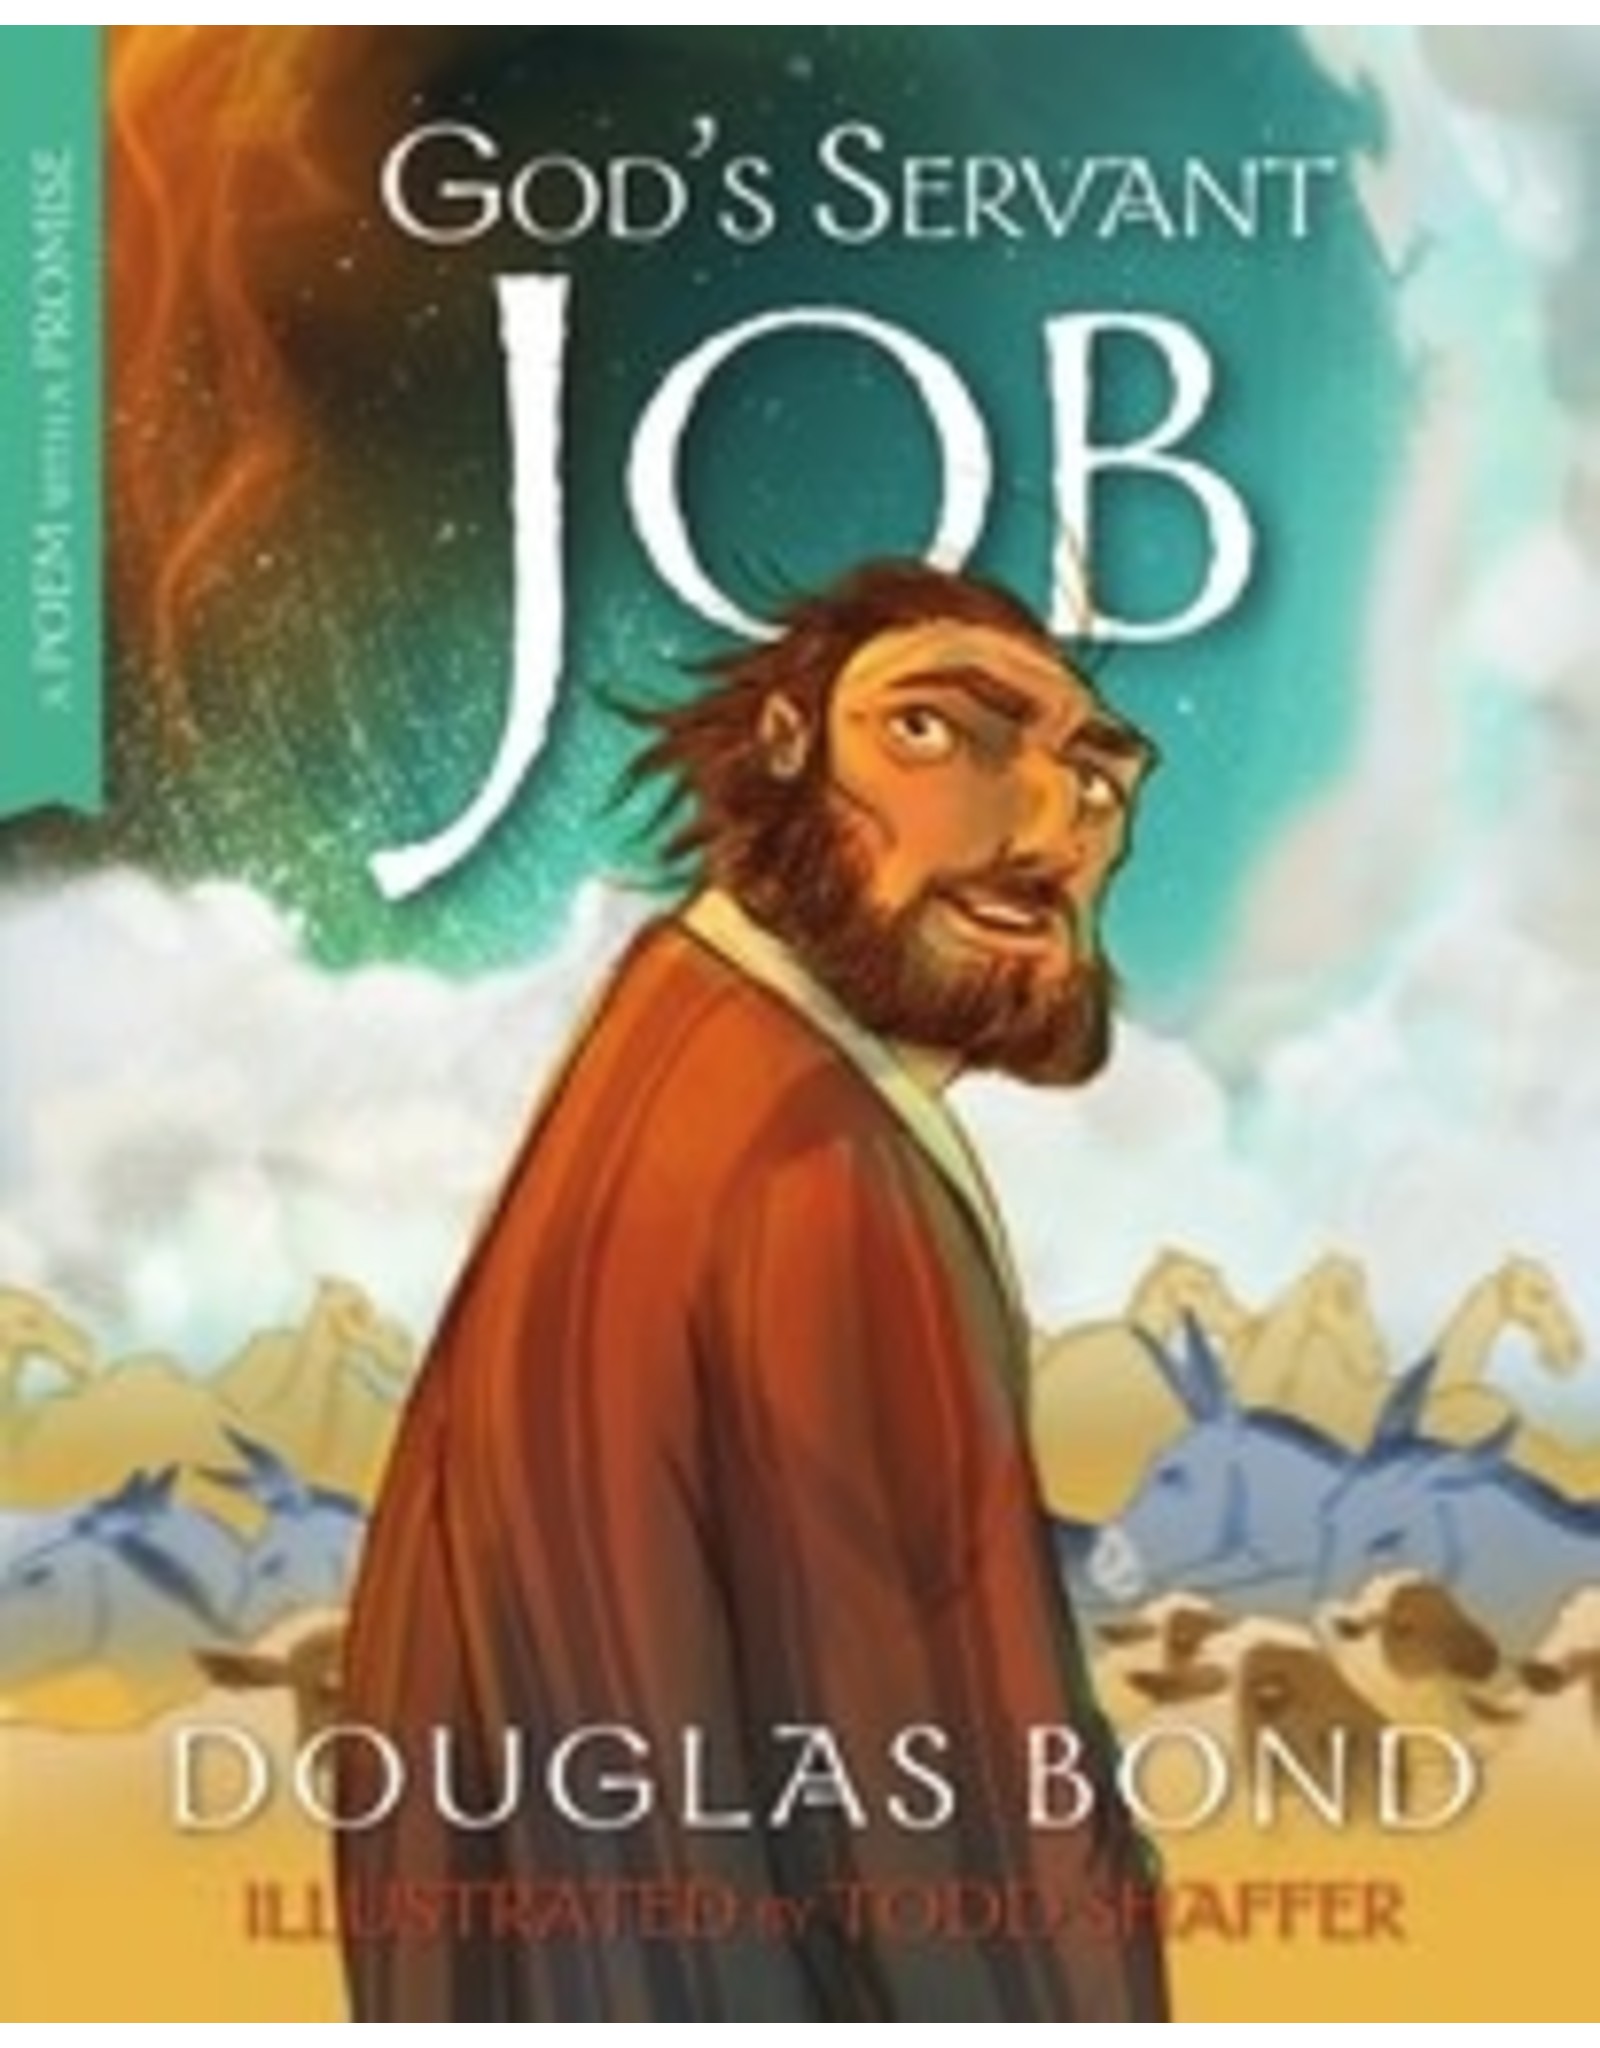 Bond God's Servant Job